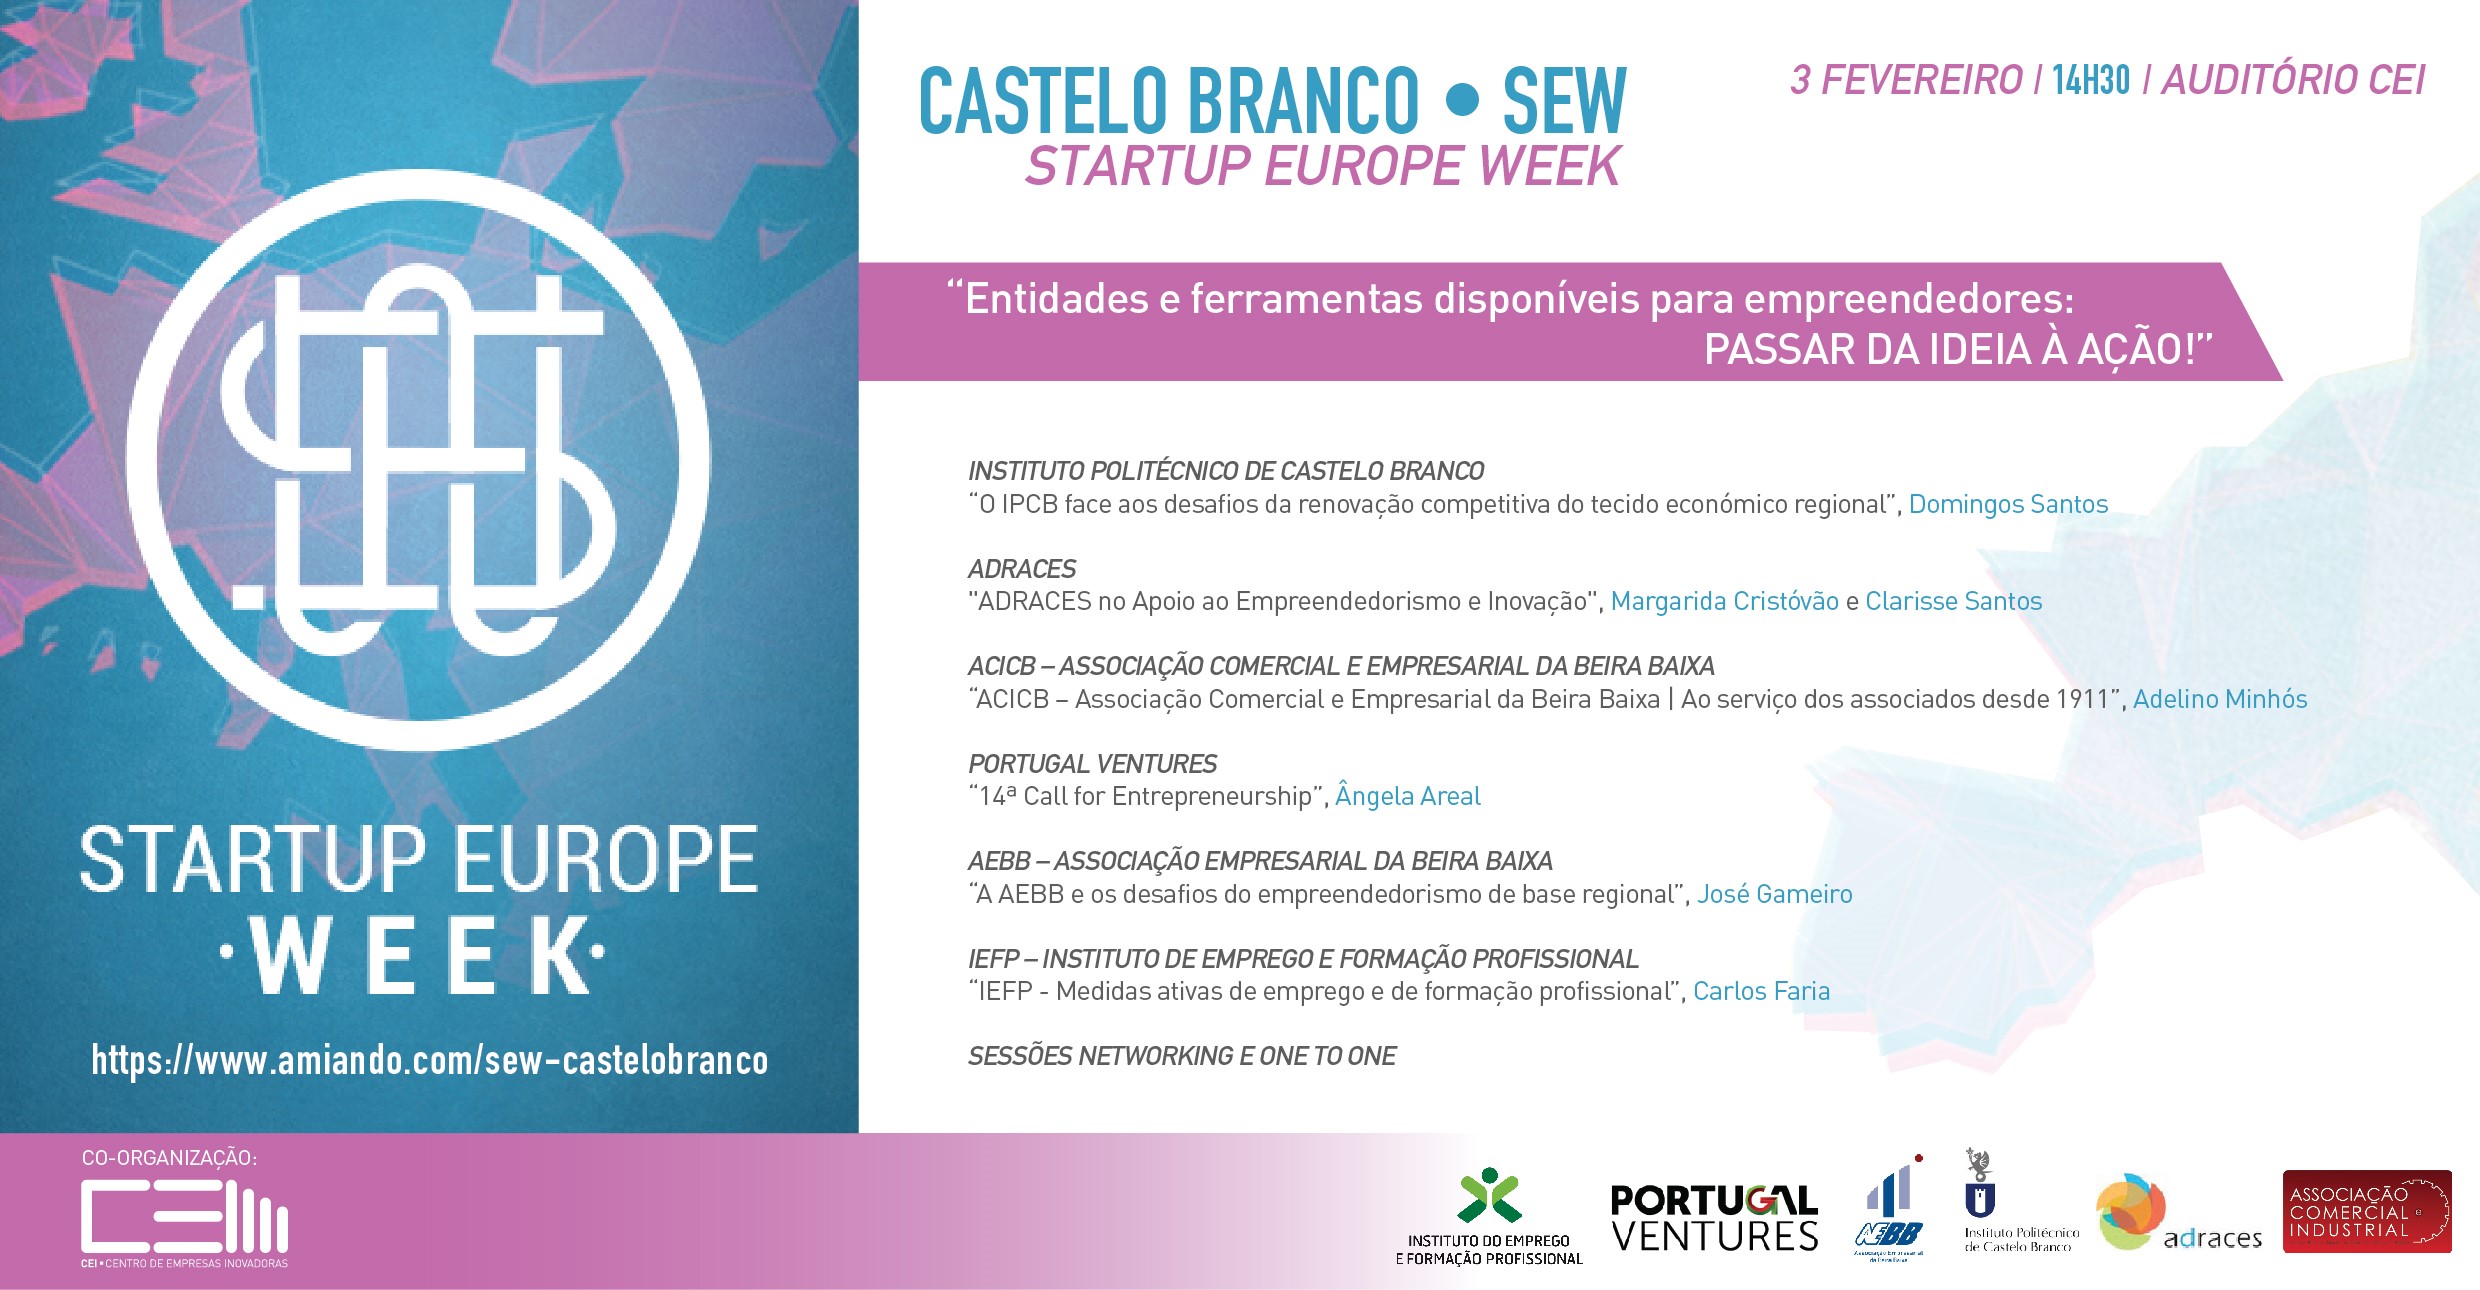 Castelo Branco: CEI co-organiza "Startup Europe Week"